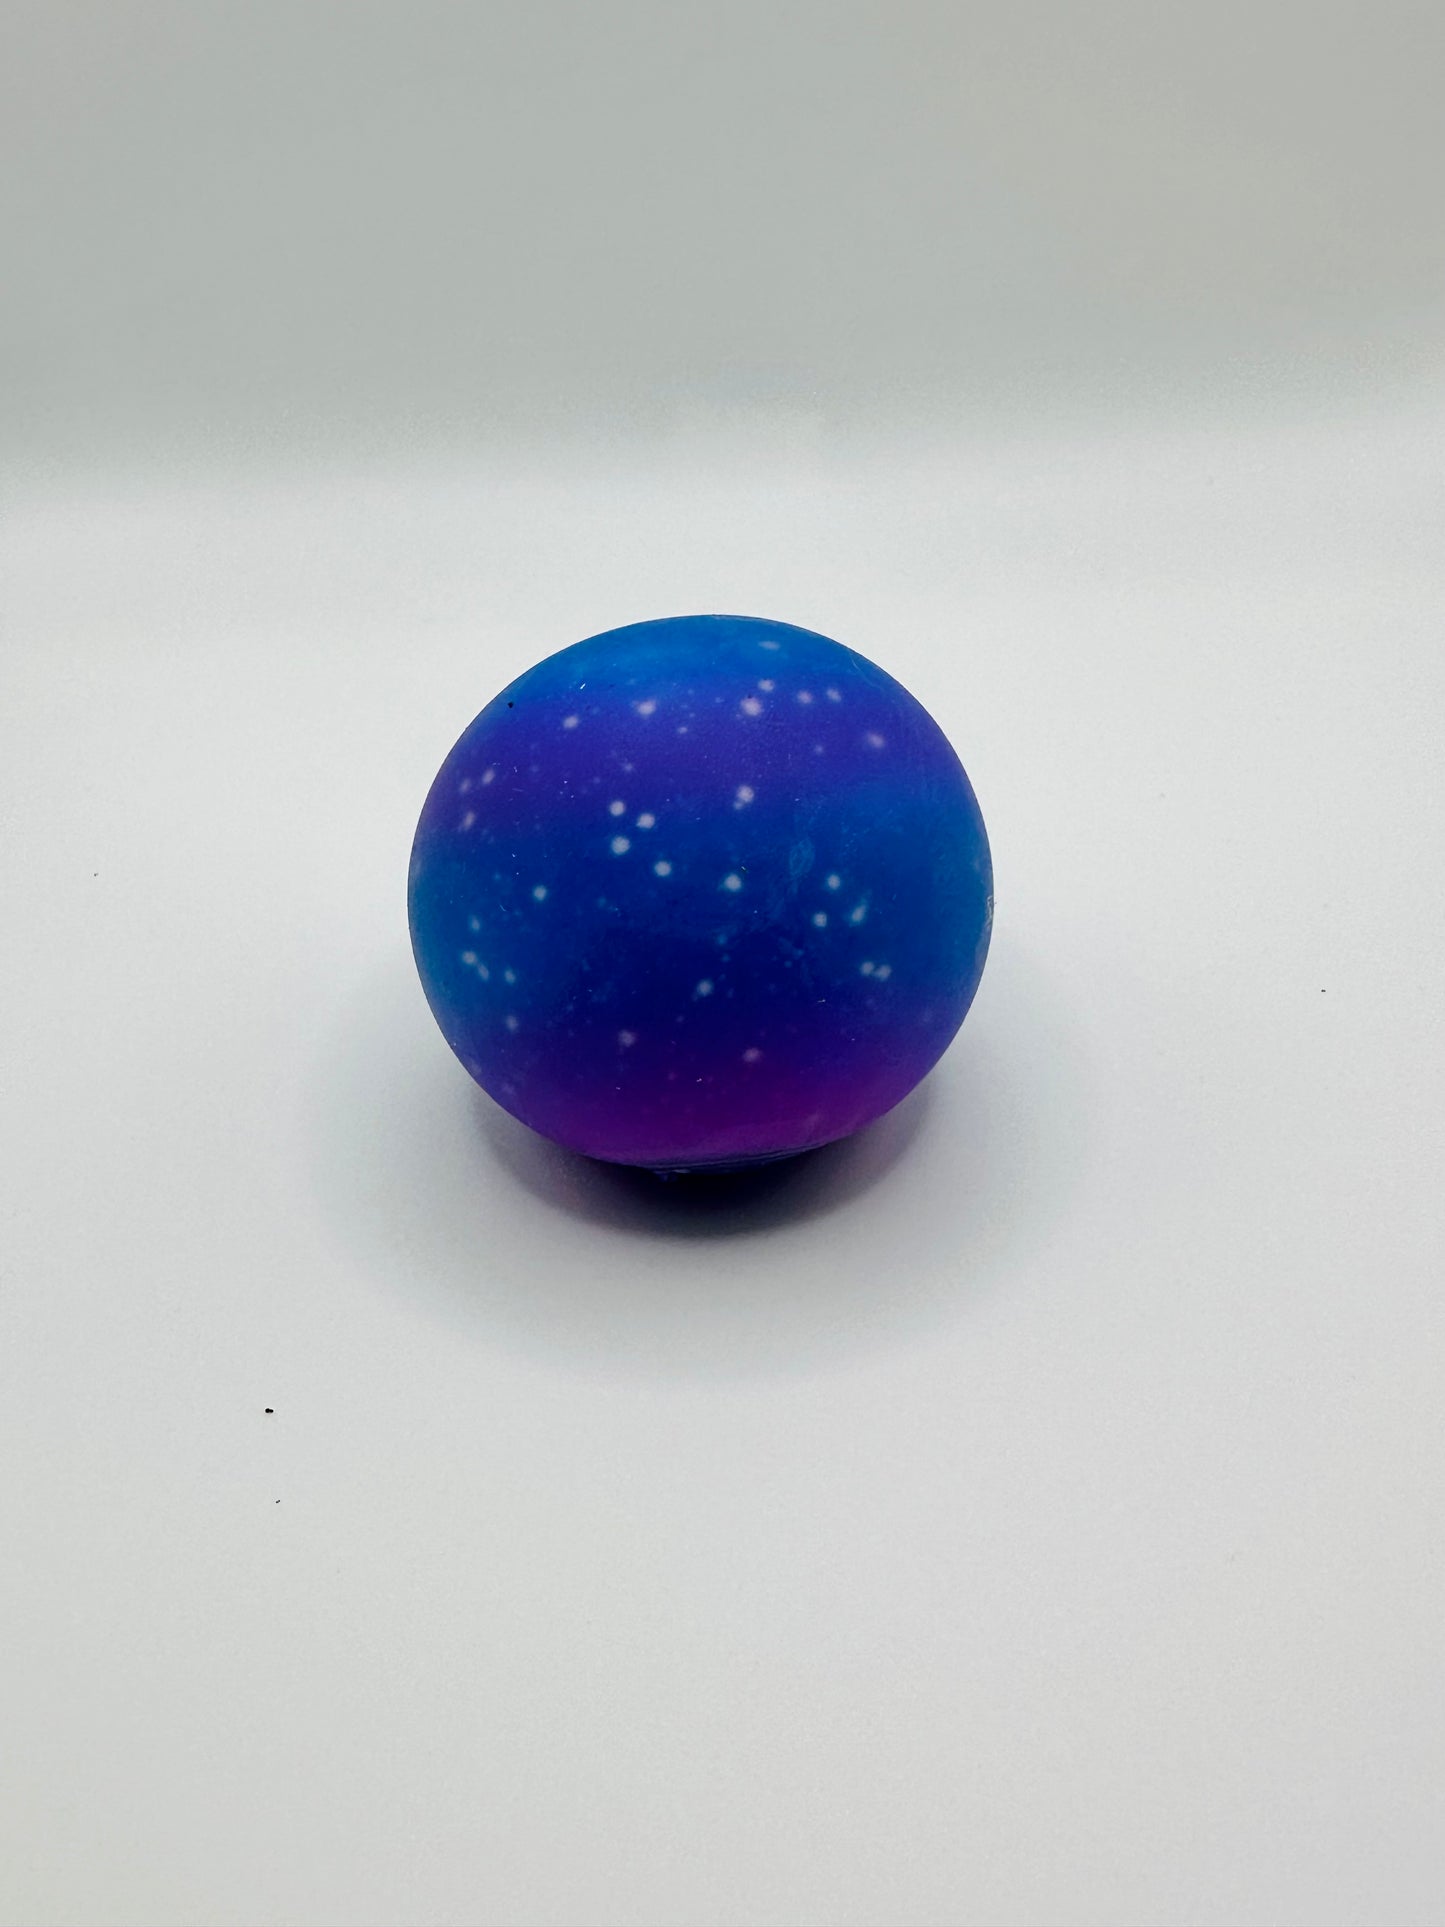 Galaxy Squish Ball